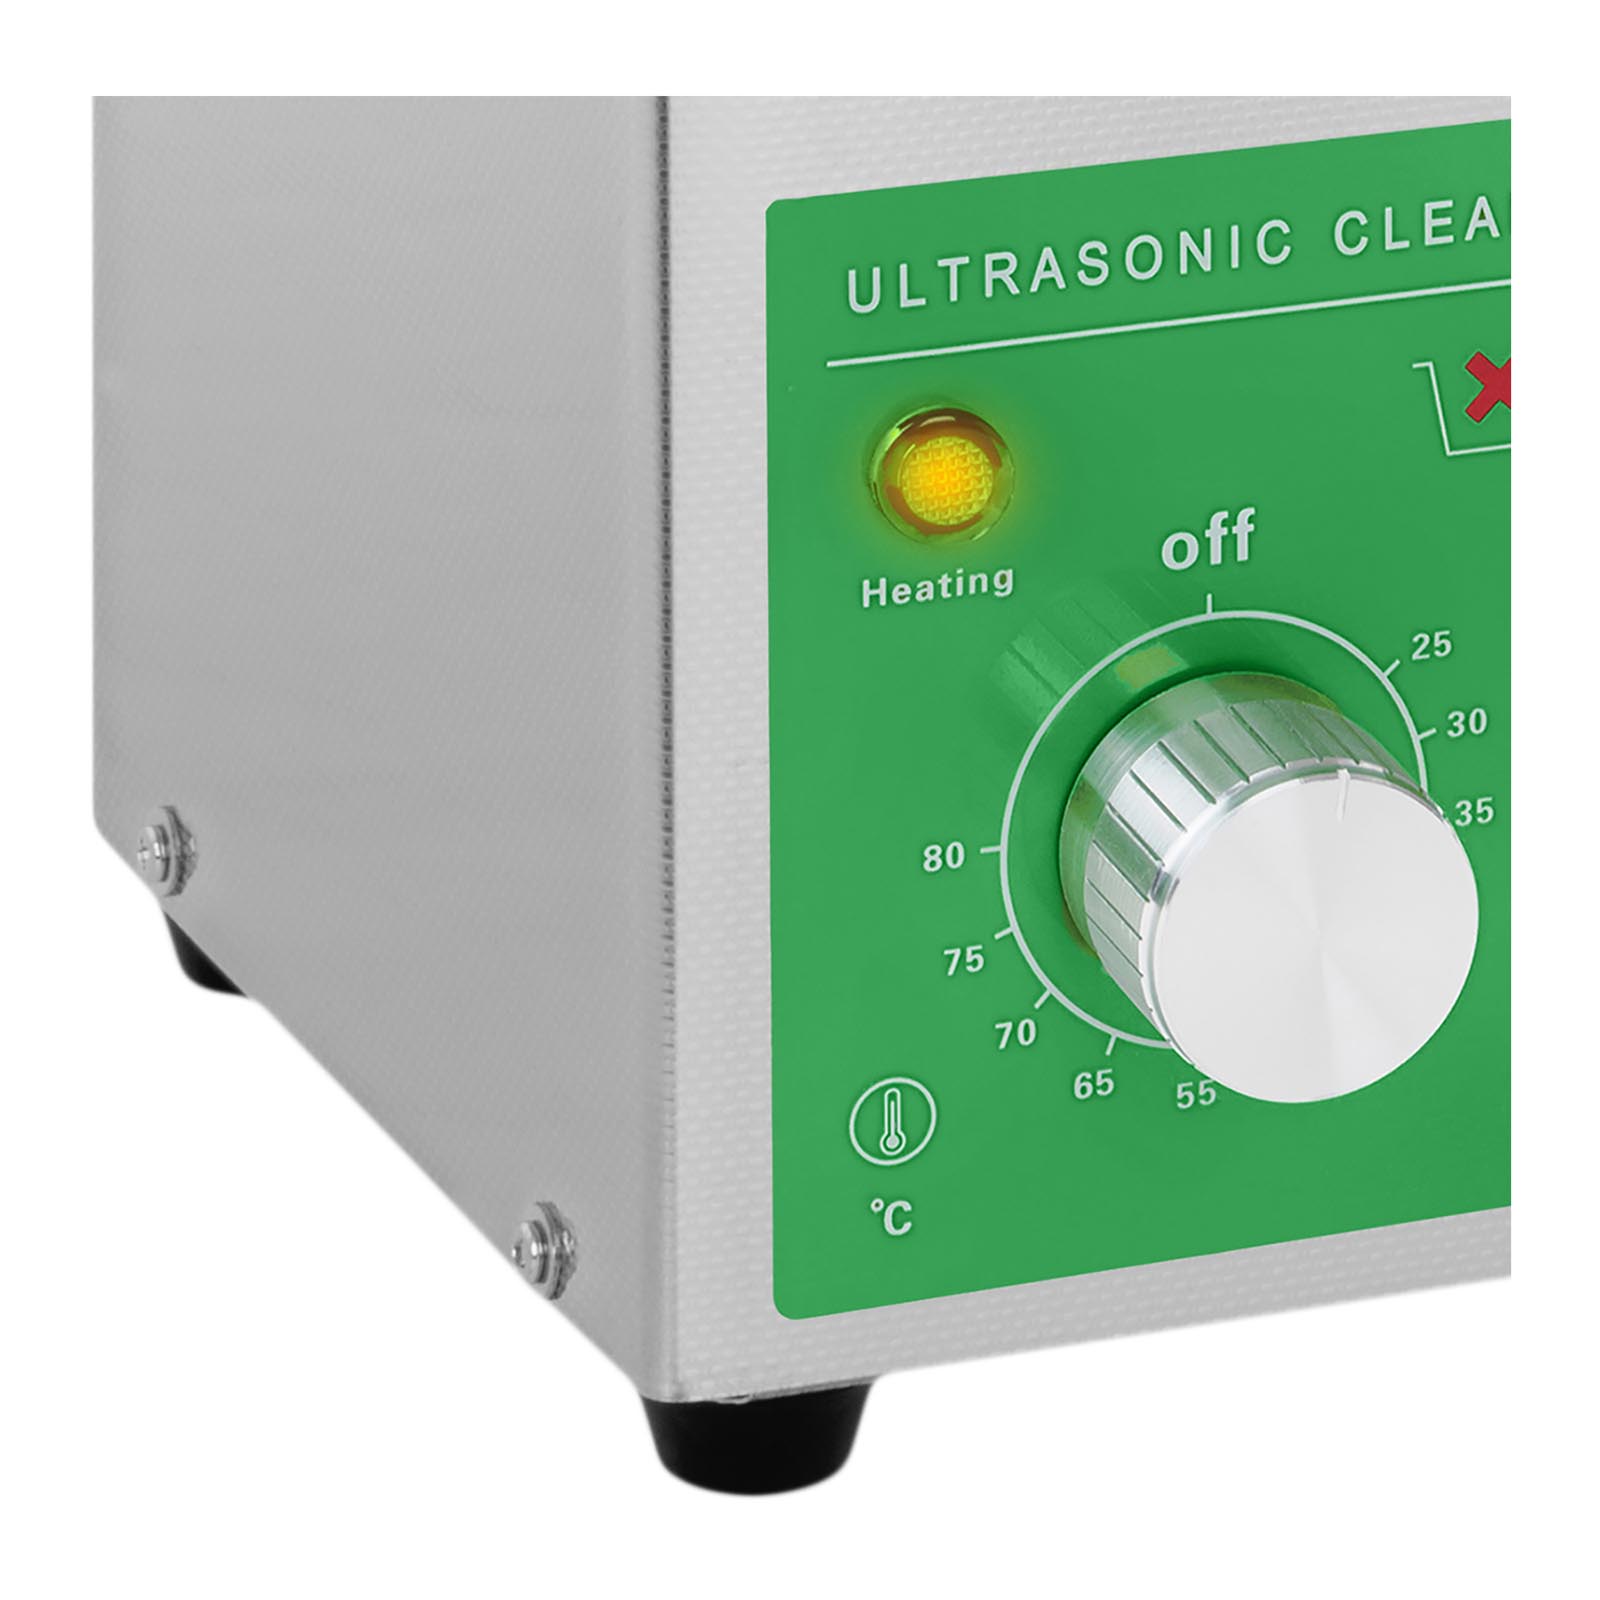 Limpiador ultrasonidos - 2 litros - 60 W - Basic Eco